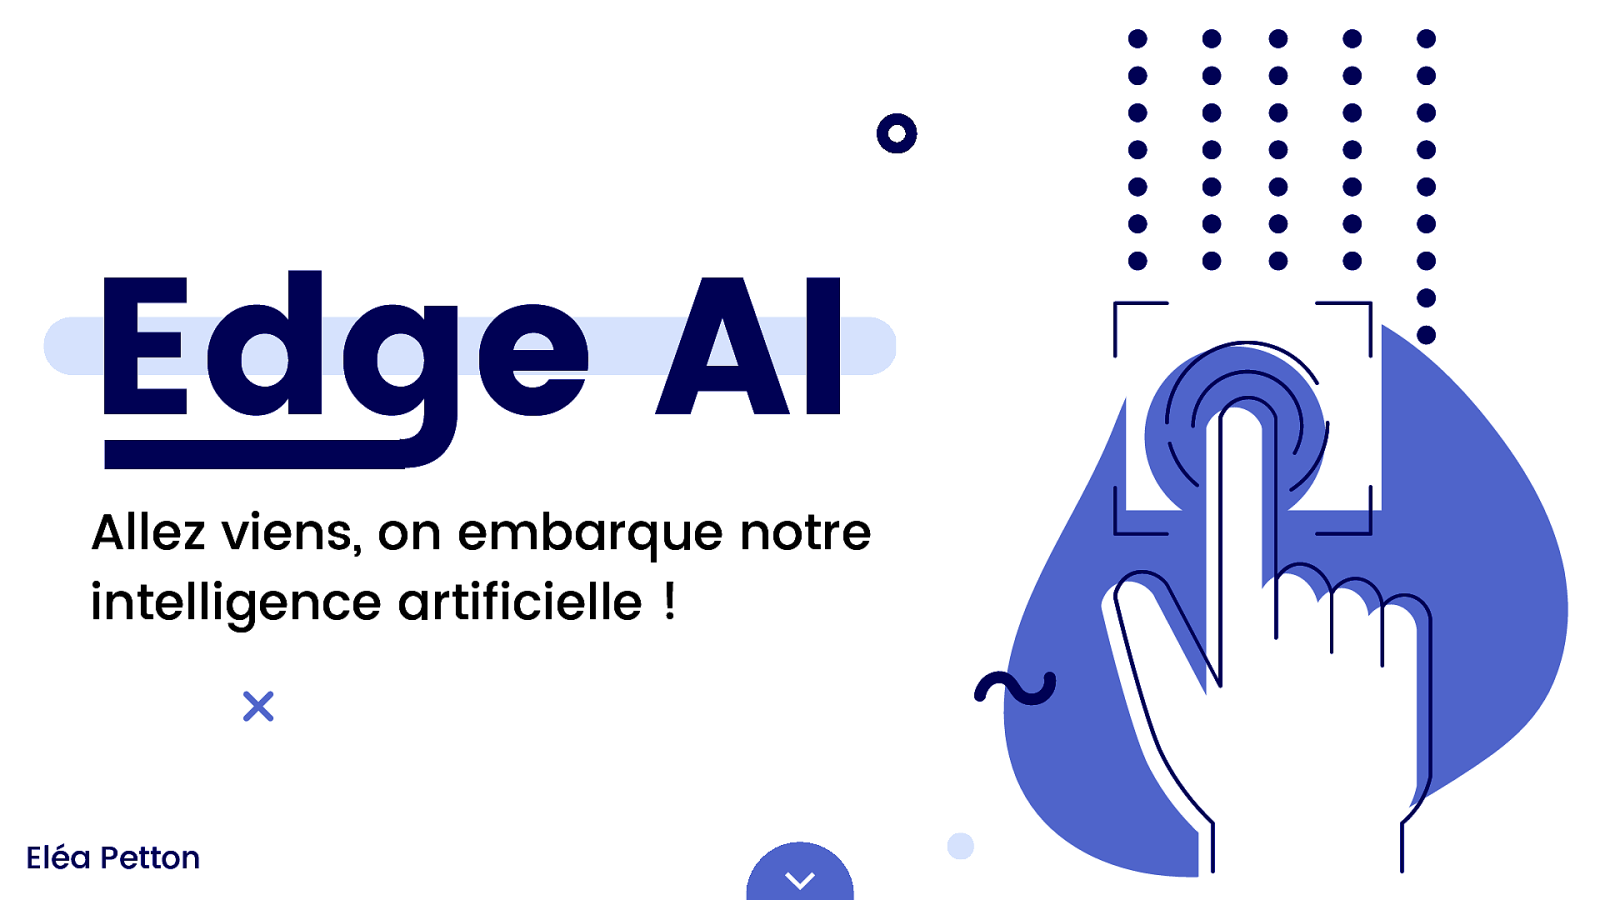 Edge AI : allez viens, on embarque notre intelligence artificielle !